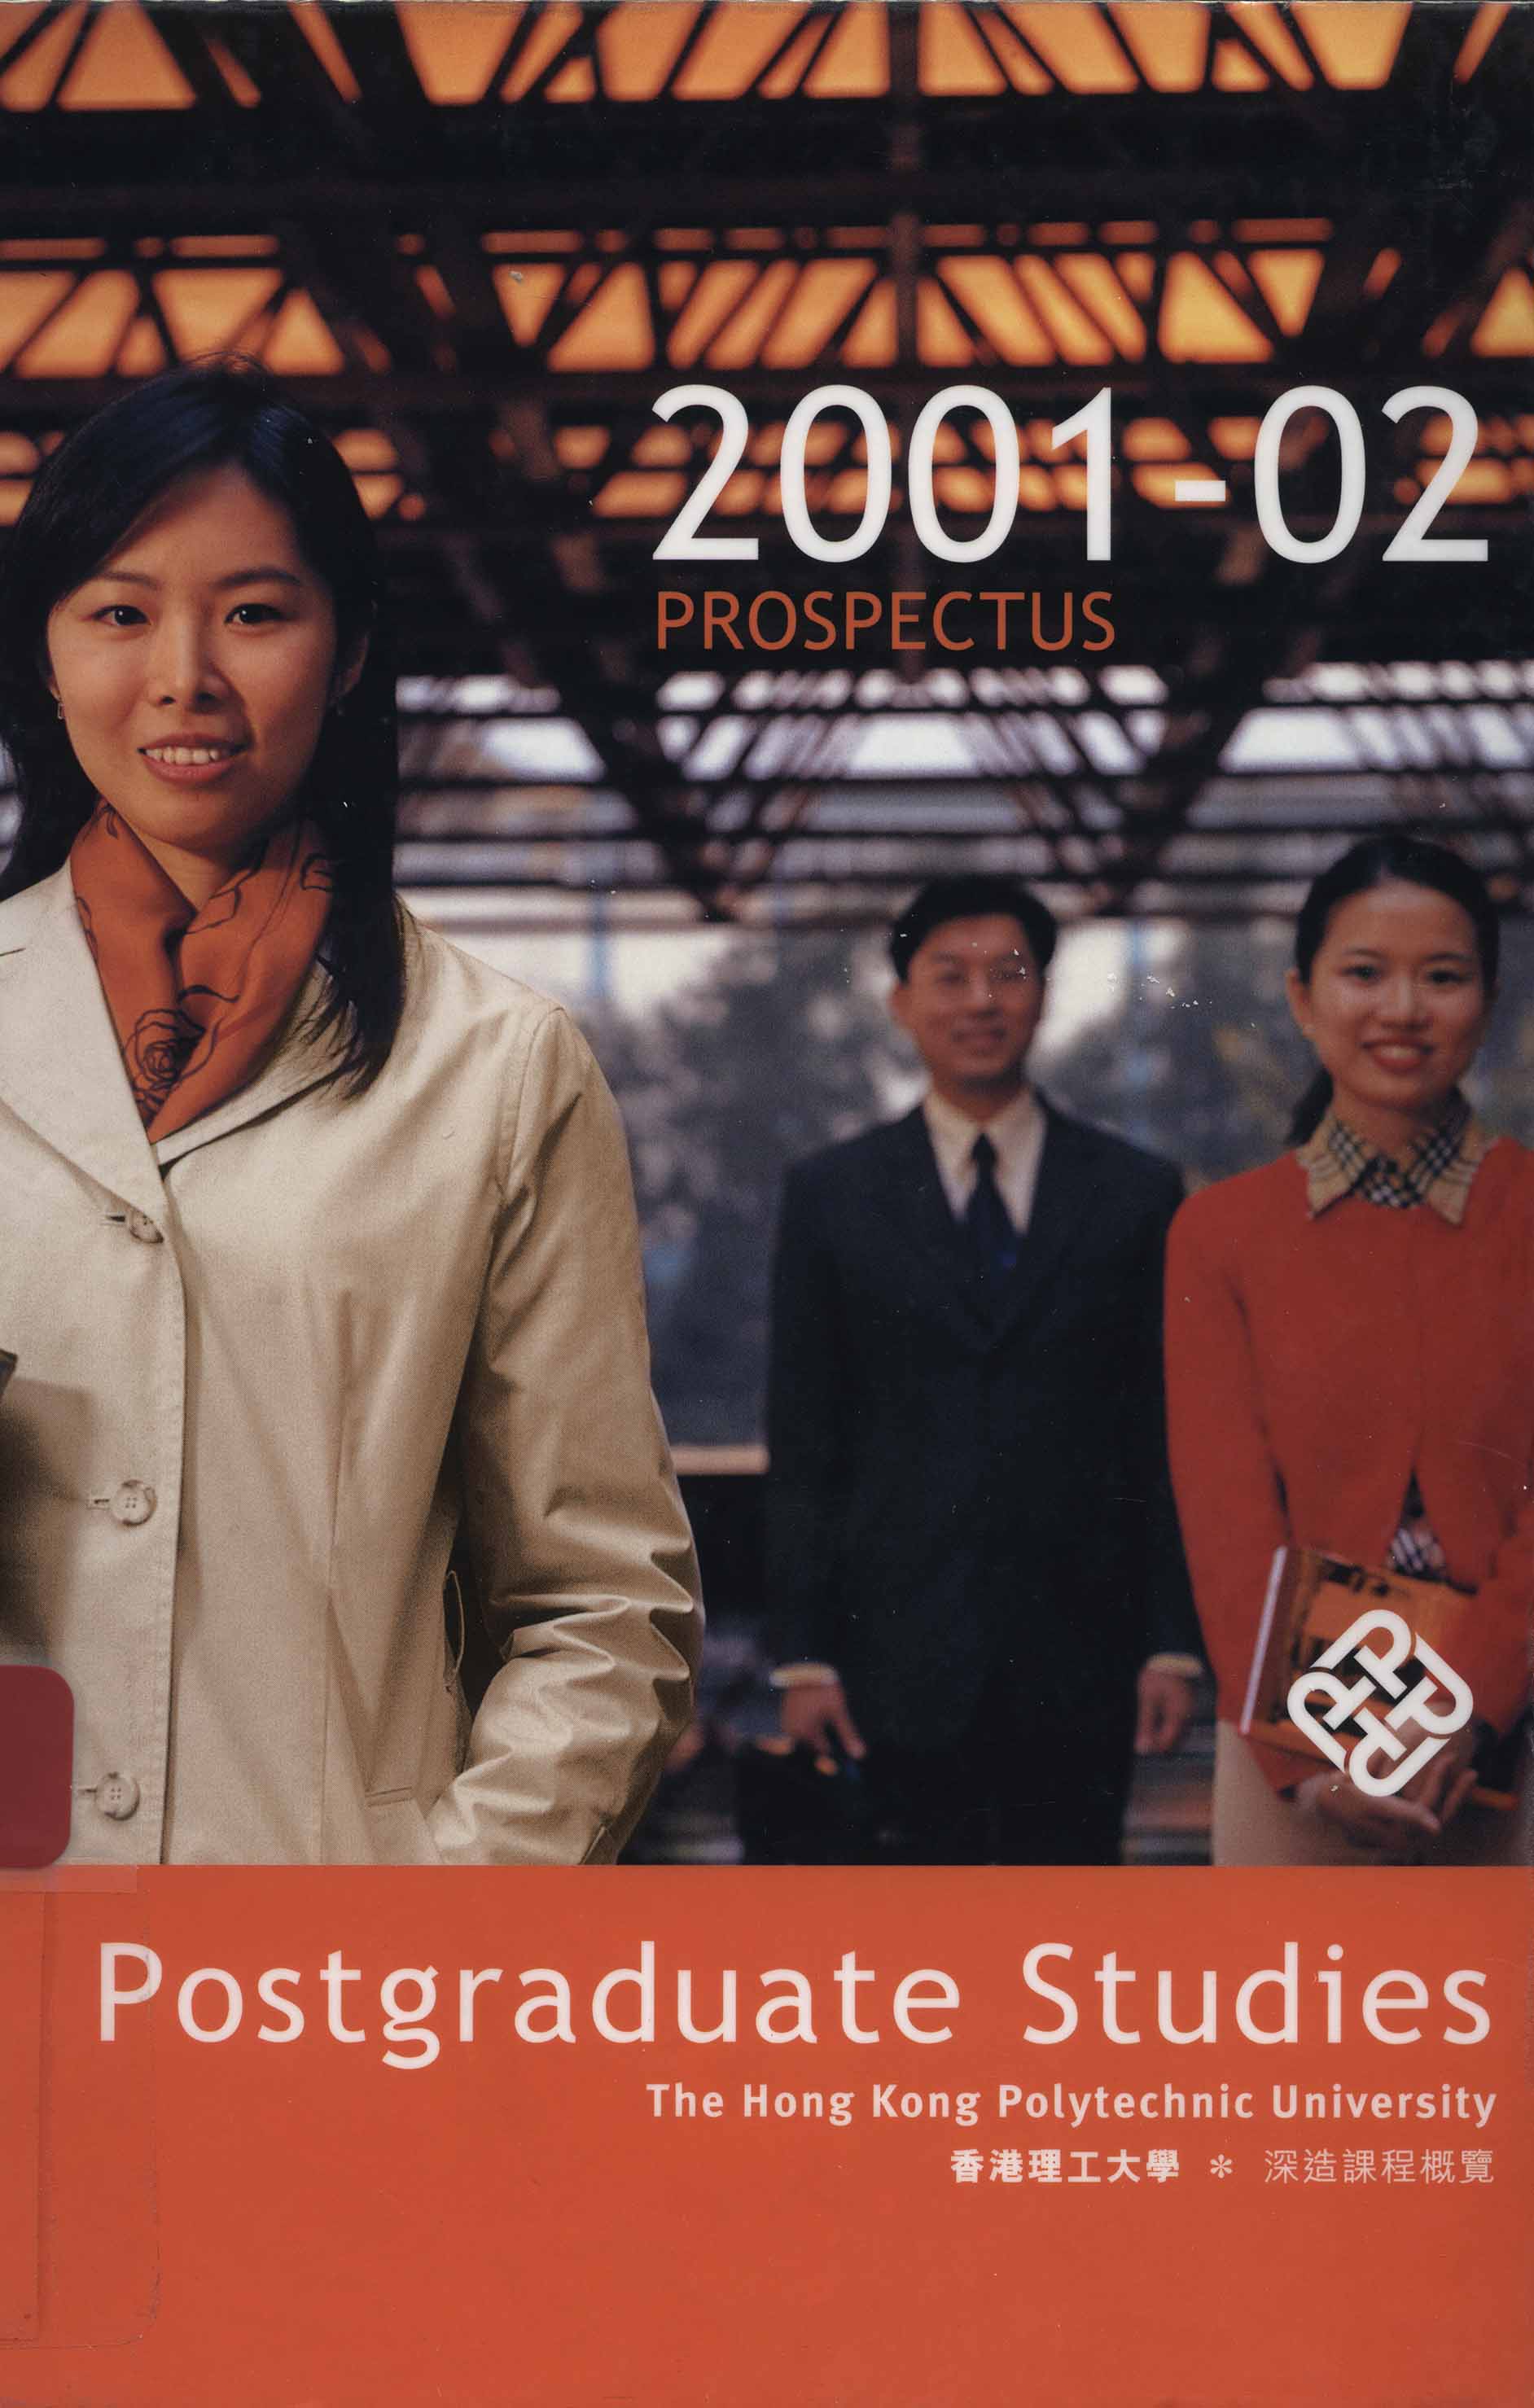 Hong Kong Polytechnic University. Prospectus. Postgraduate studies 2001/02